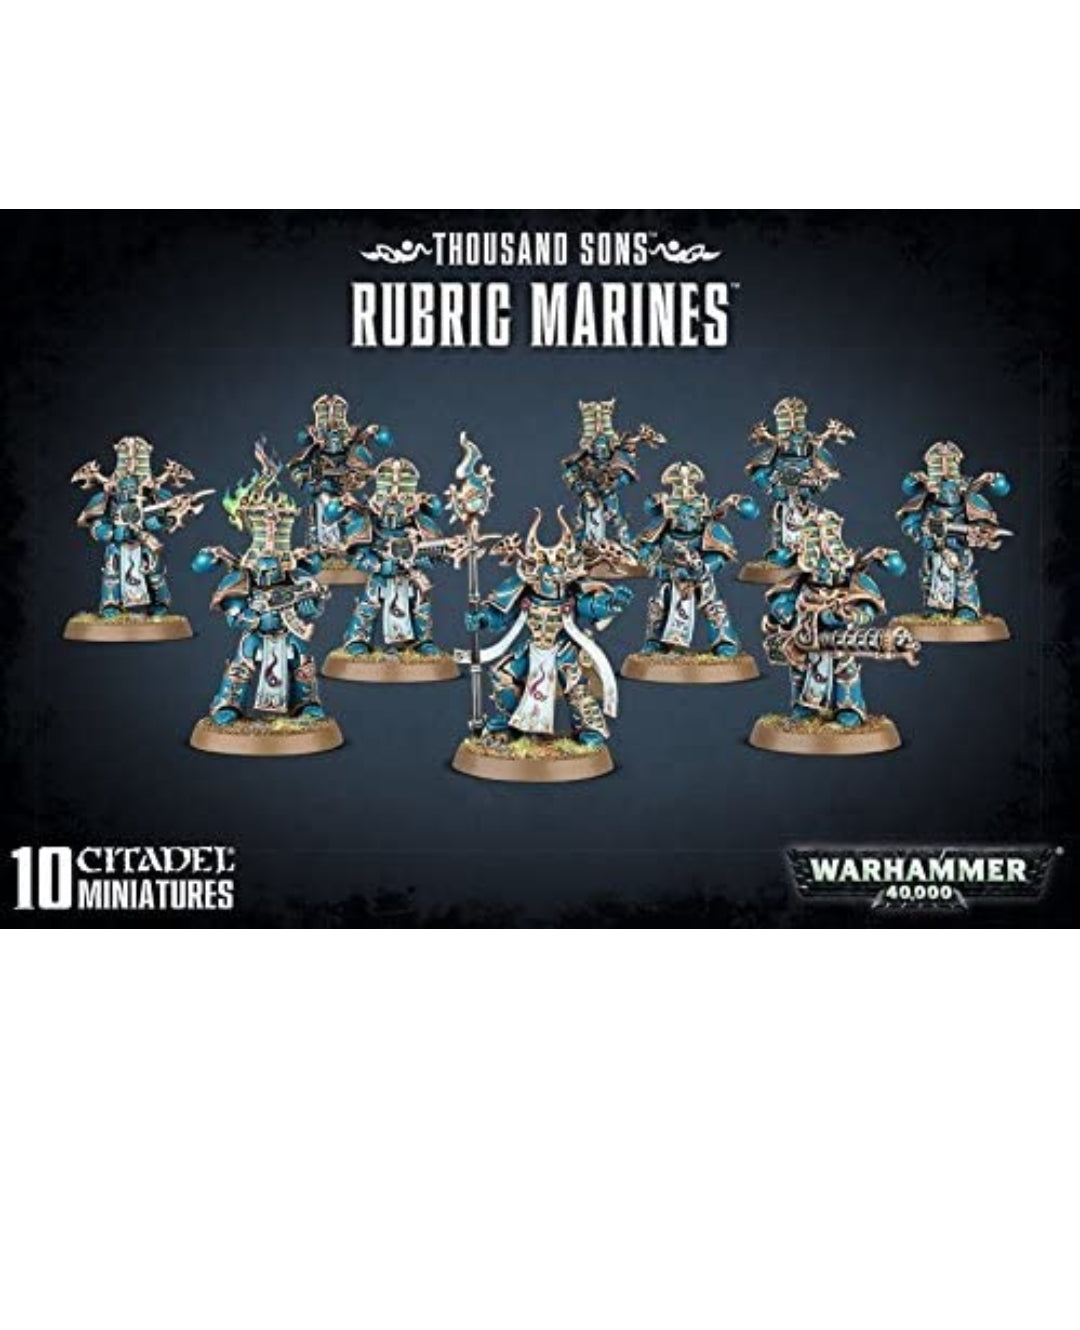 Warhammer 40,000: Thousand Sons (Rubric Marines)